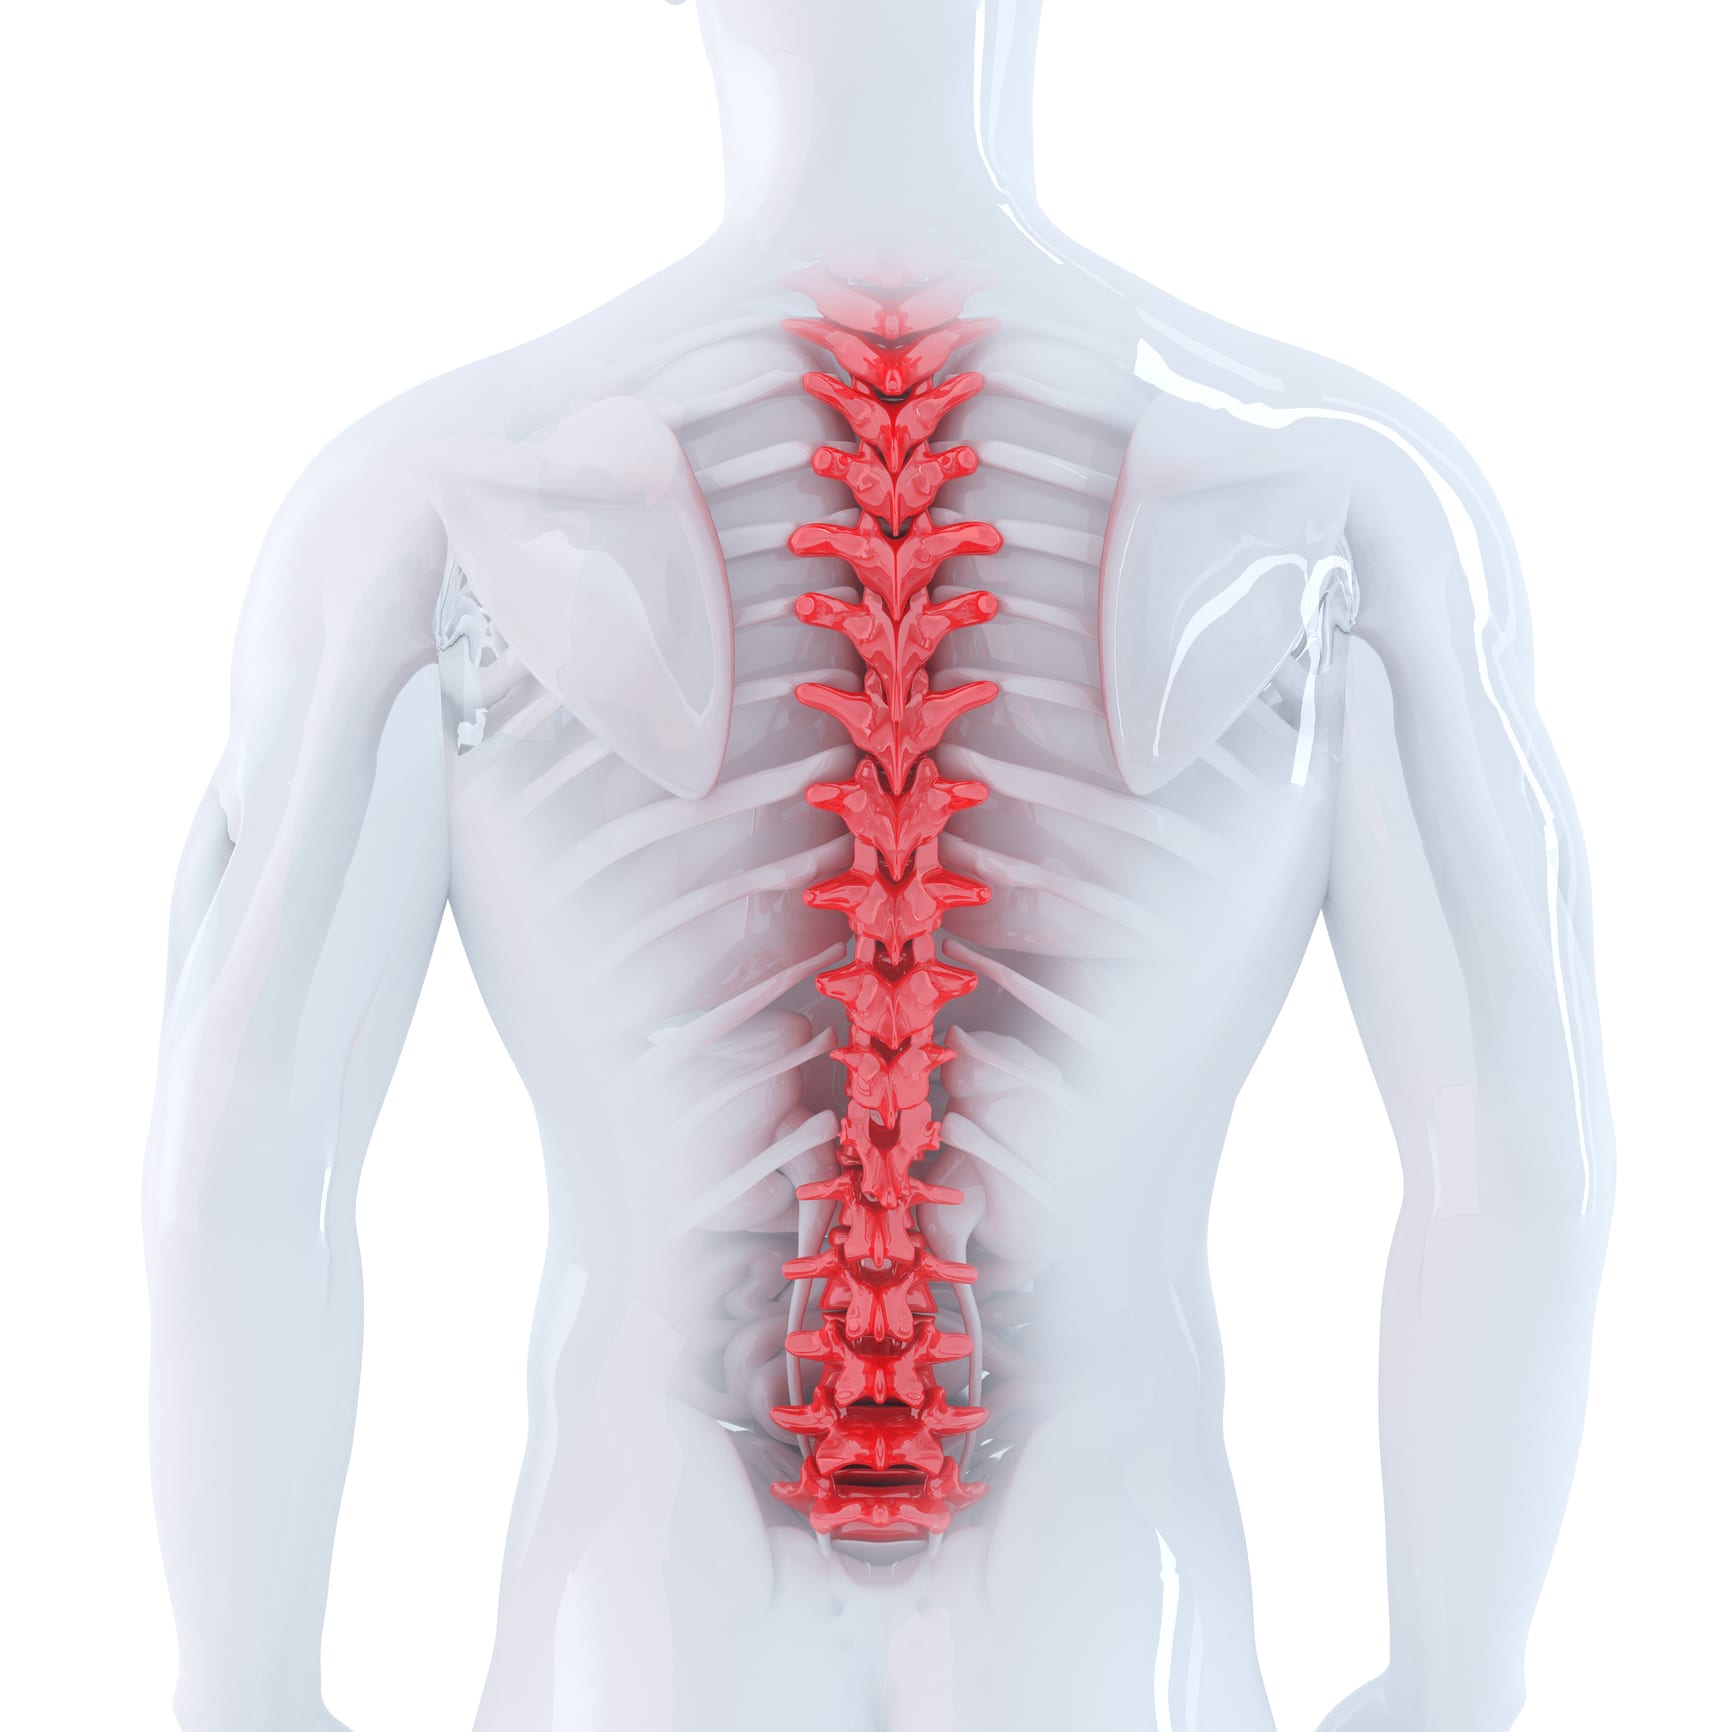 Spinal stenosis and back pain San Antonio